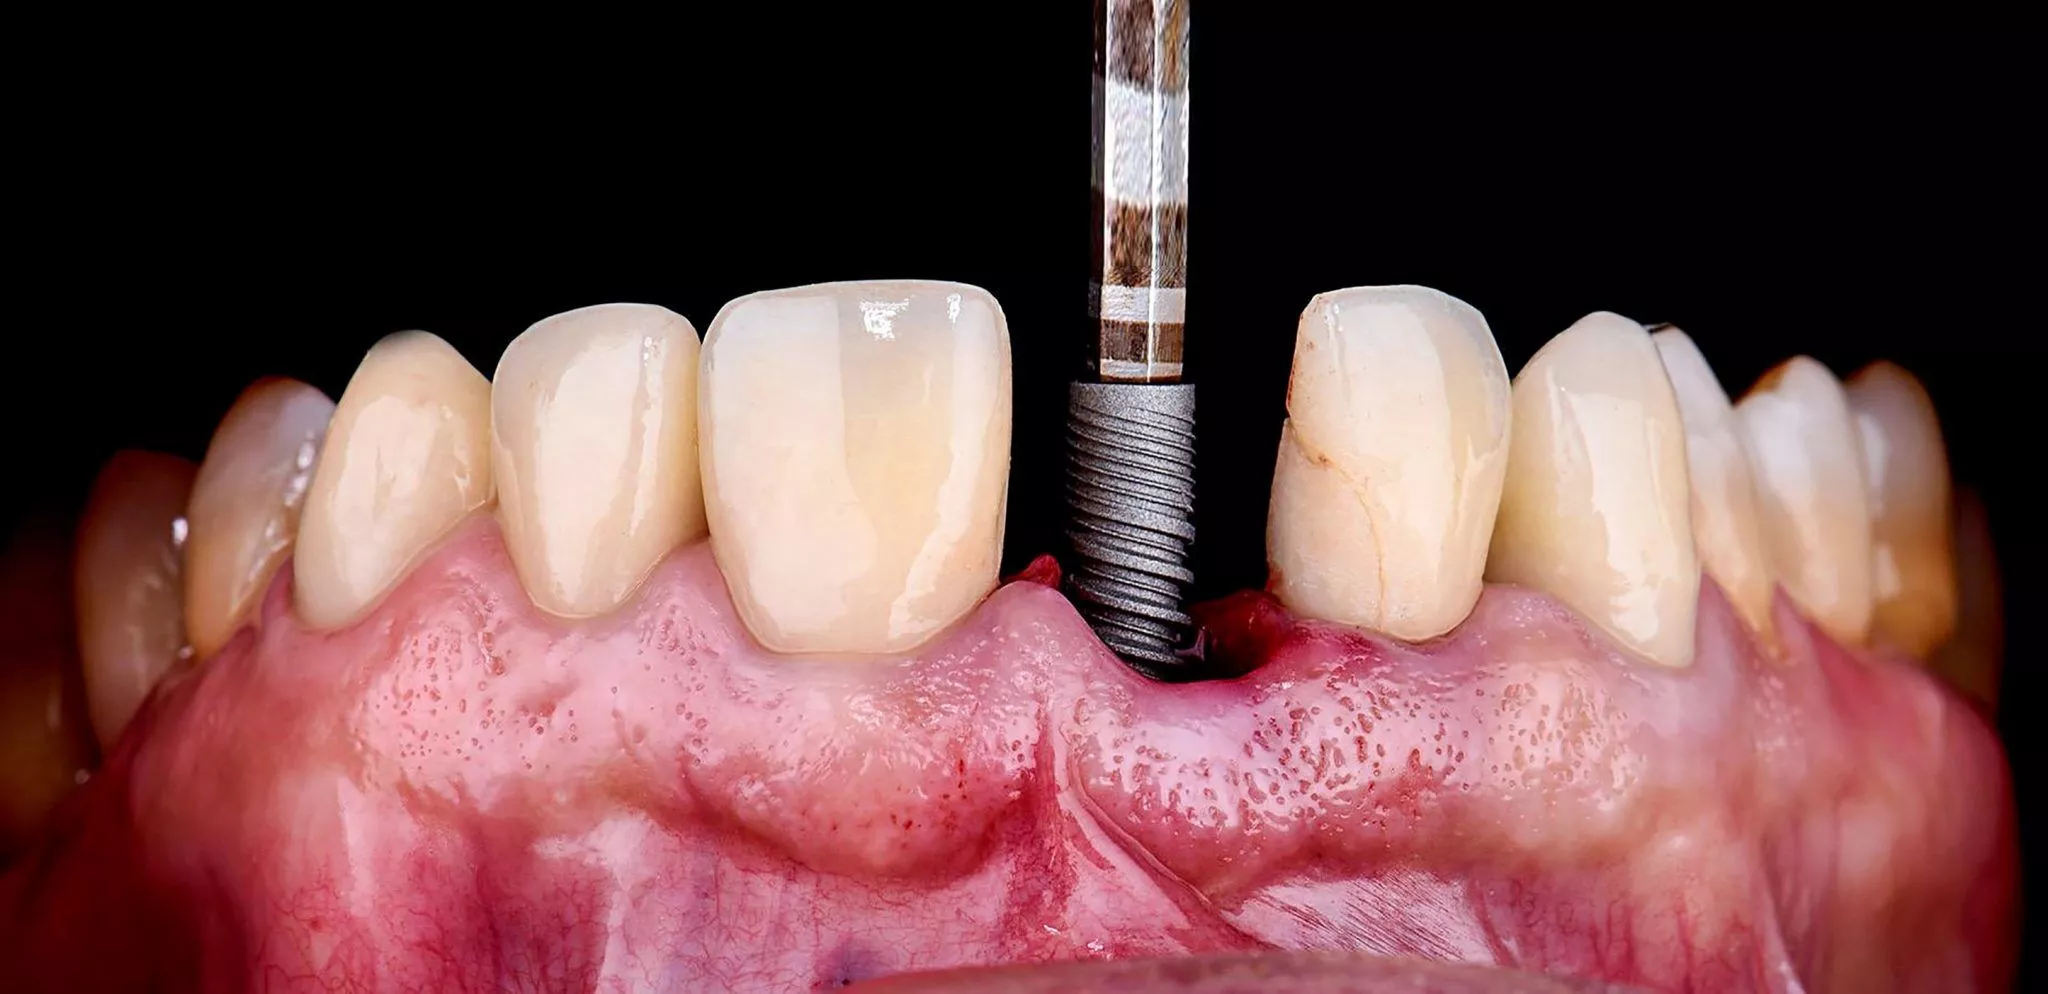 Average healing time for dental implants